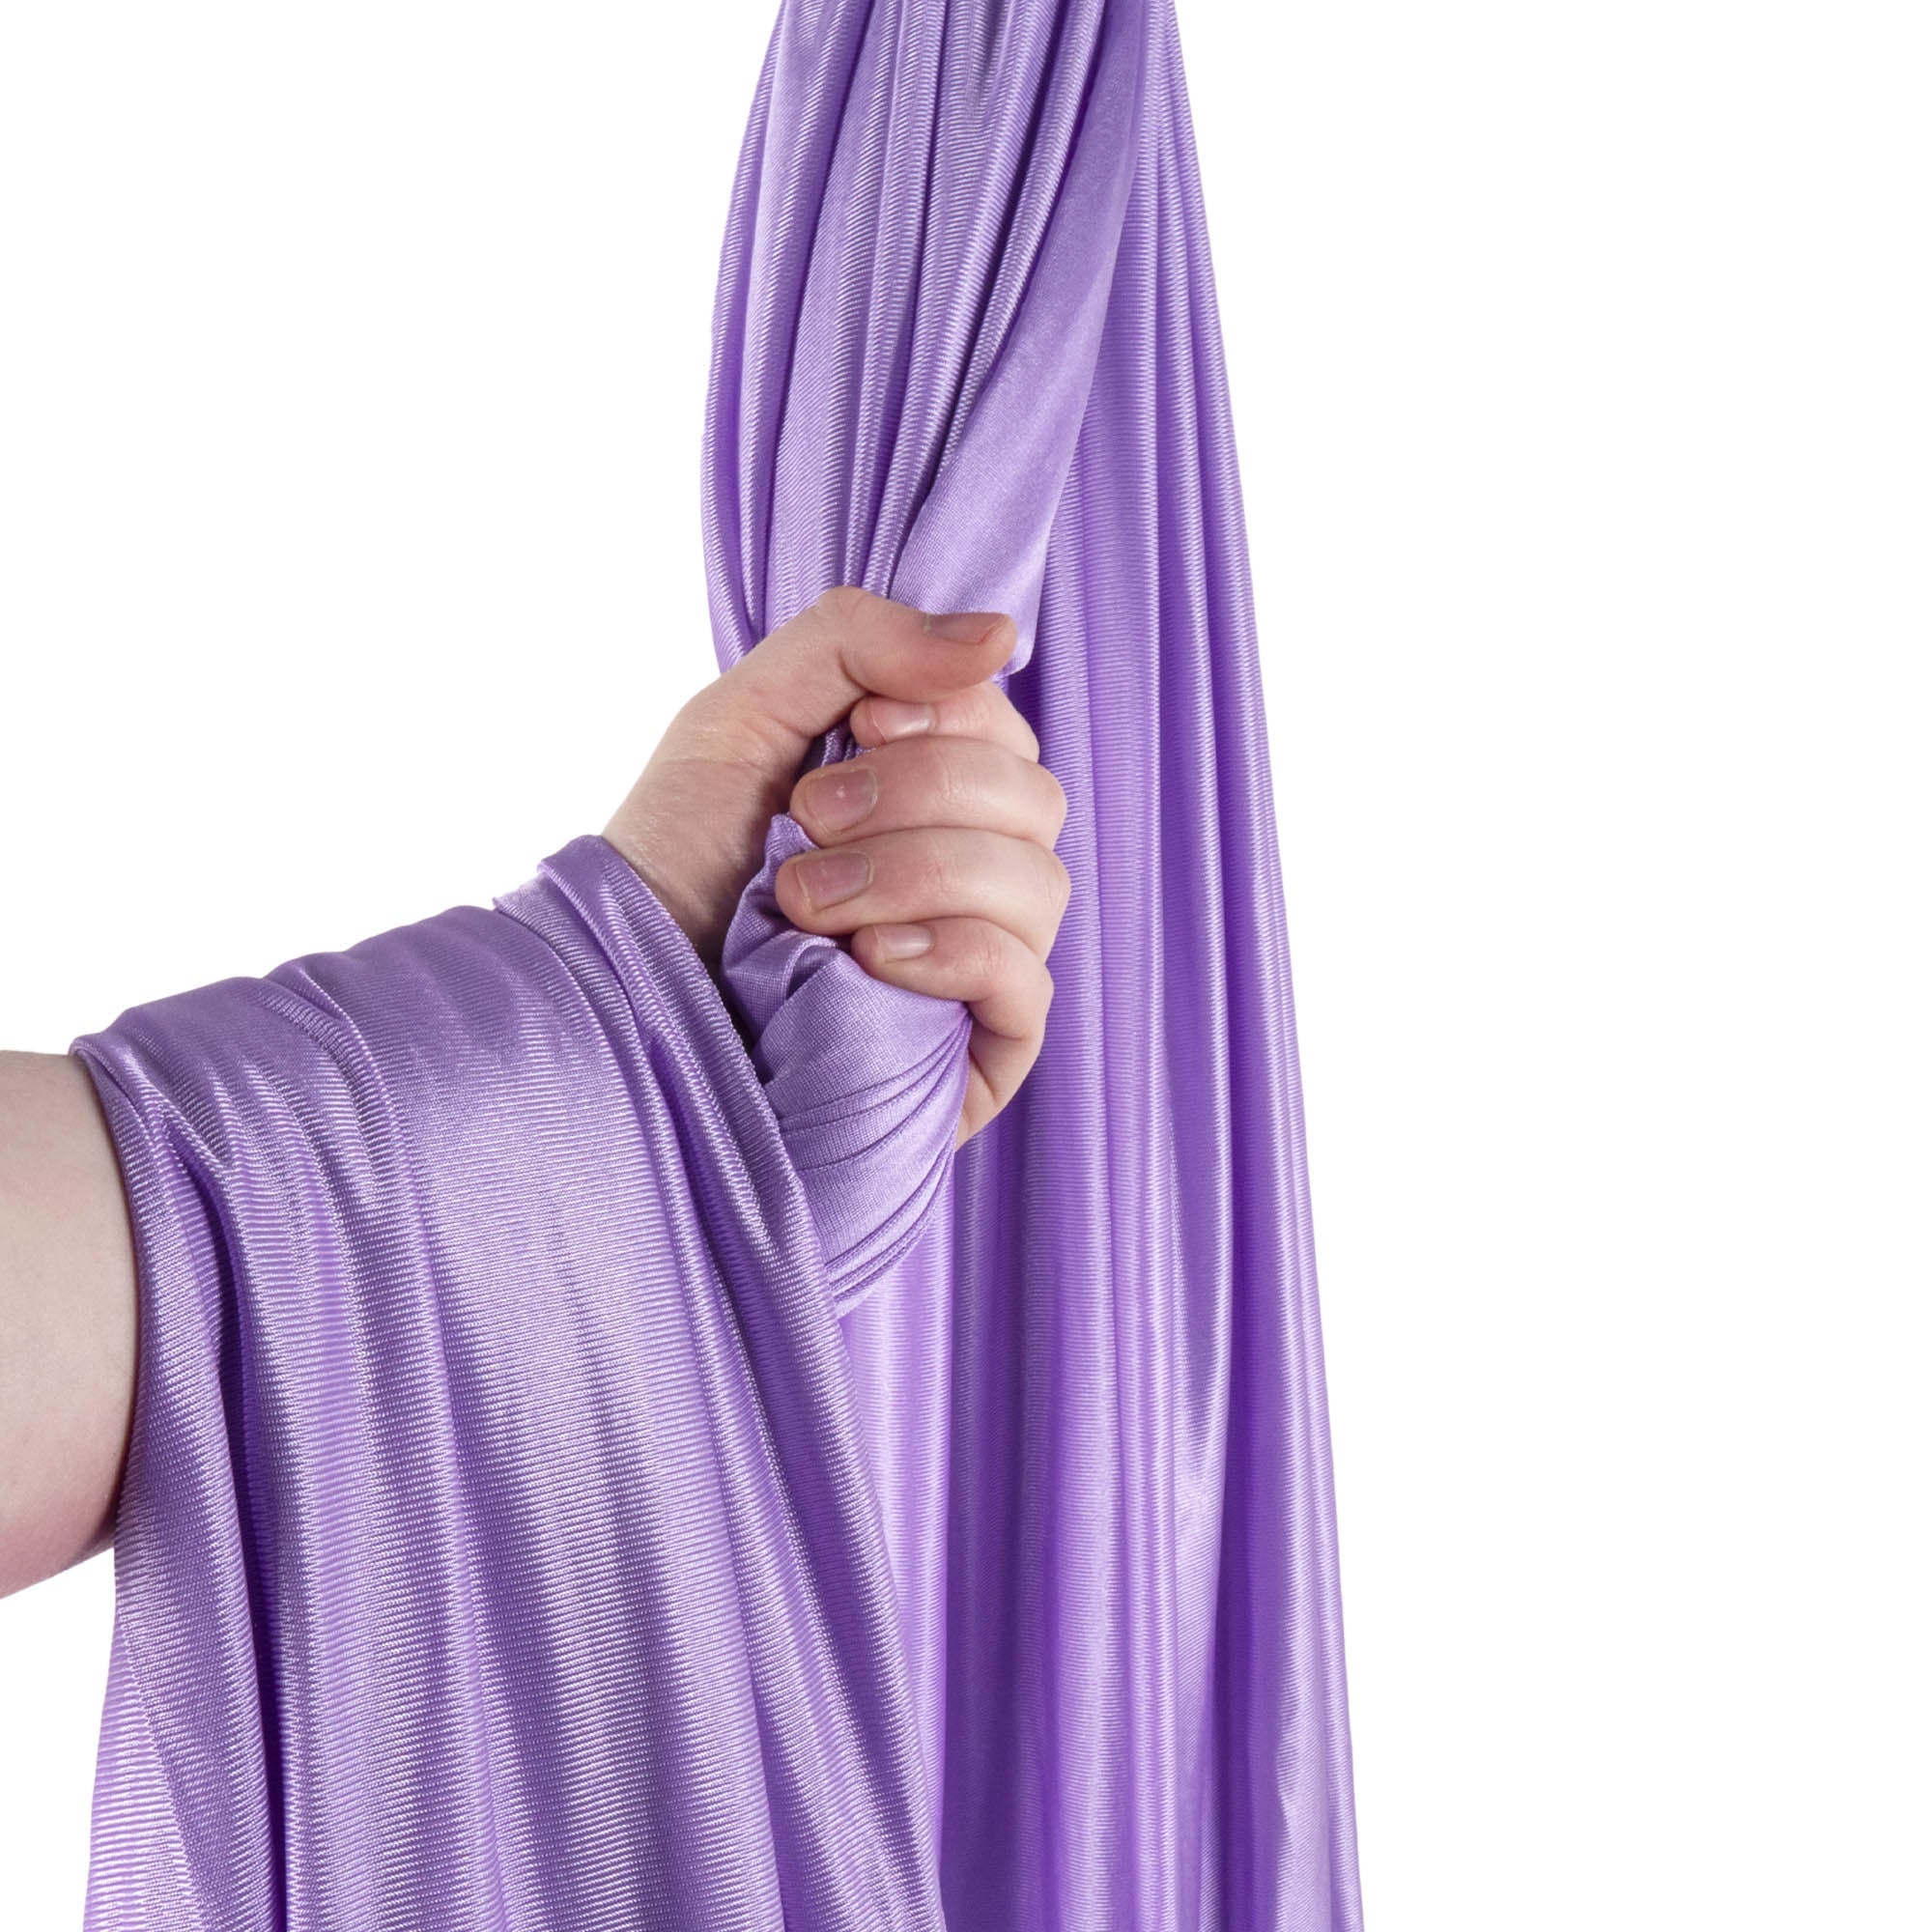 Lavender yoga hammock wrapped around hand